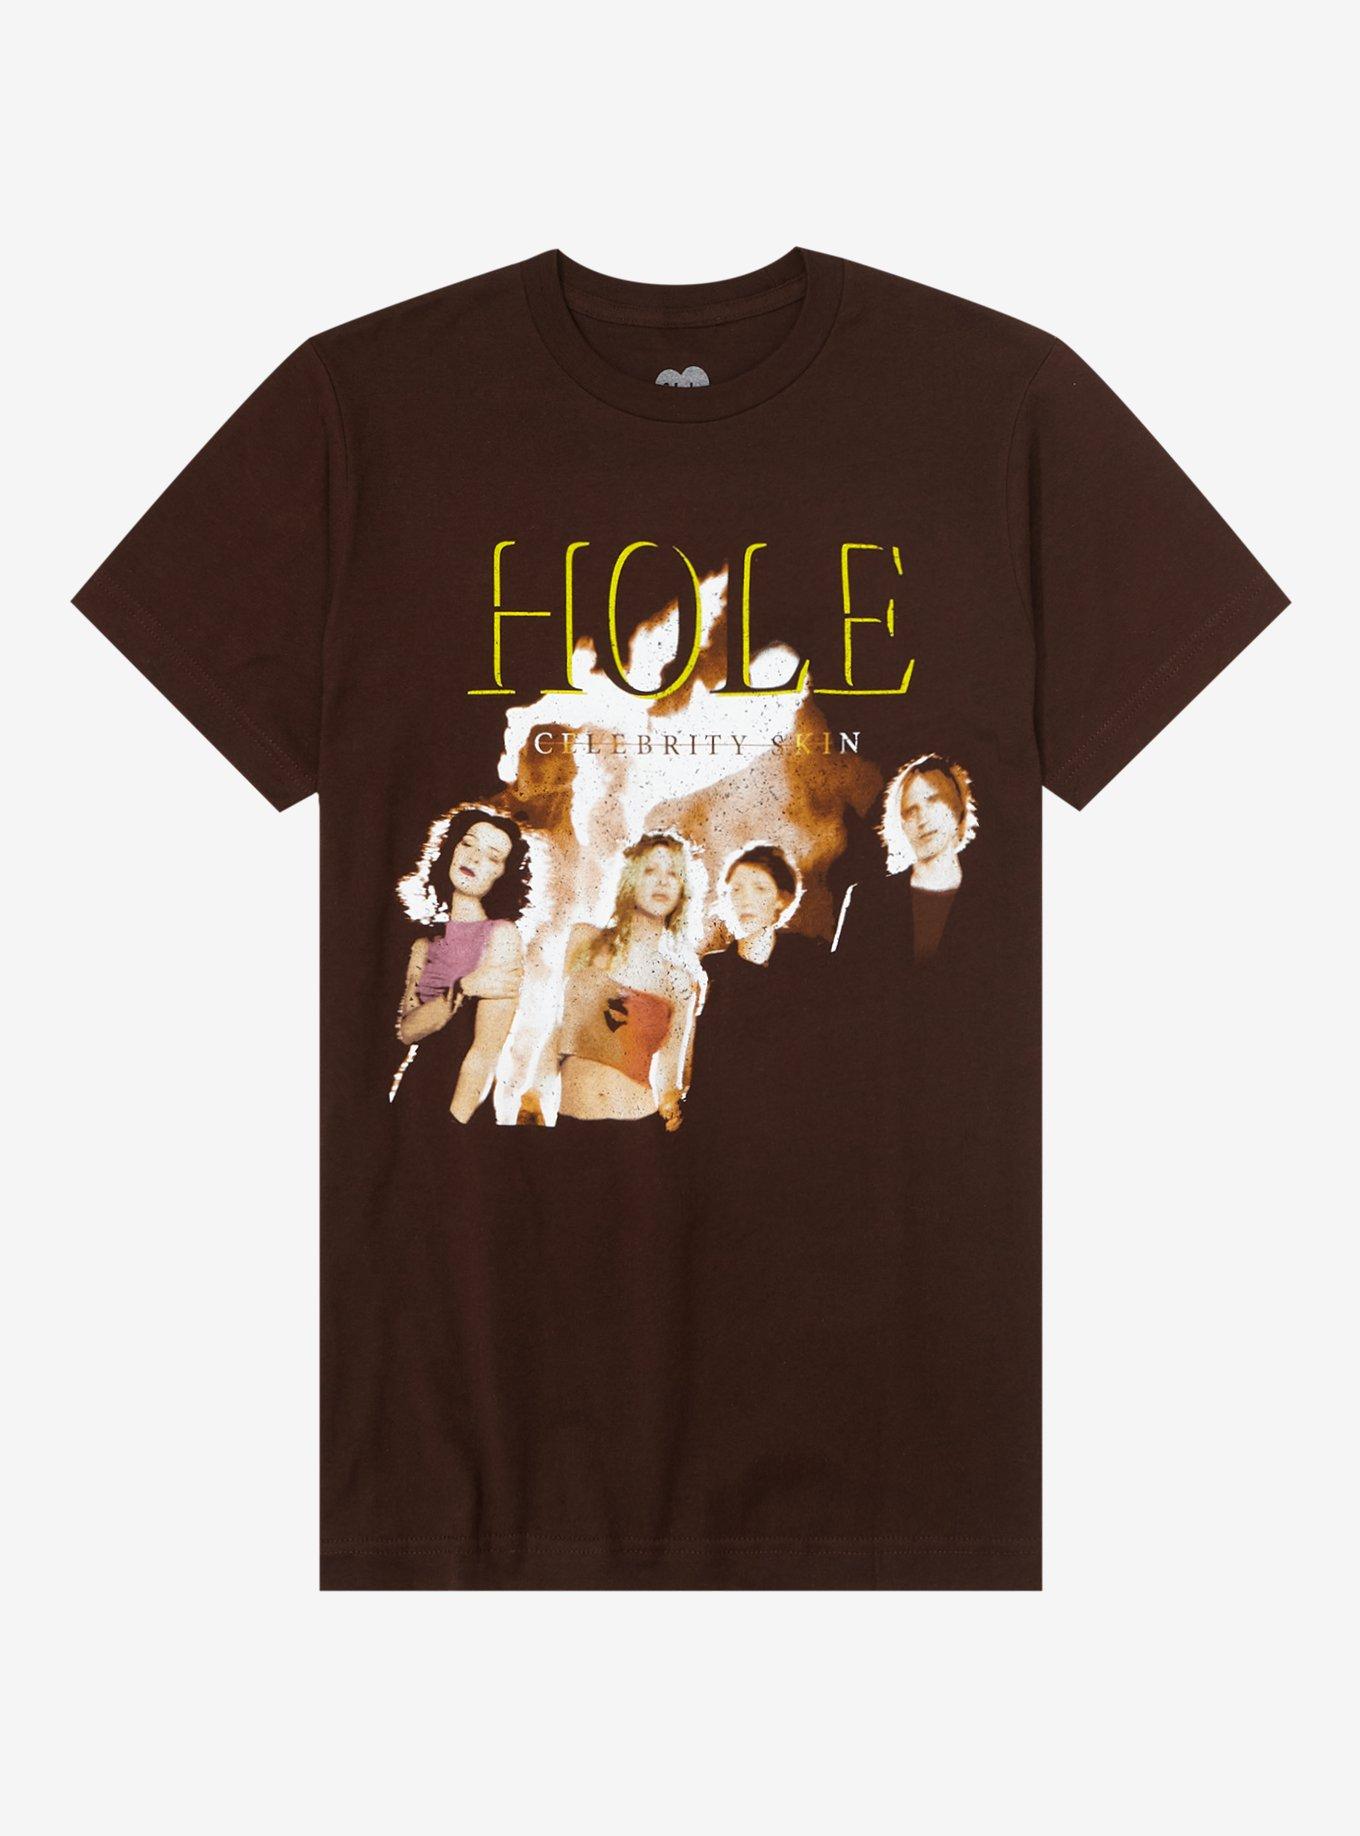 Hole Celebrity Skin Boyfriend Fit Girls T-Shirt